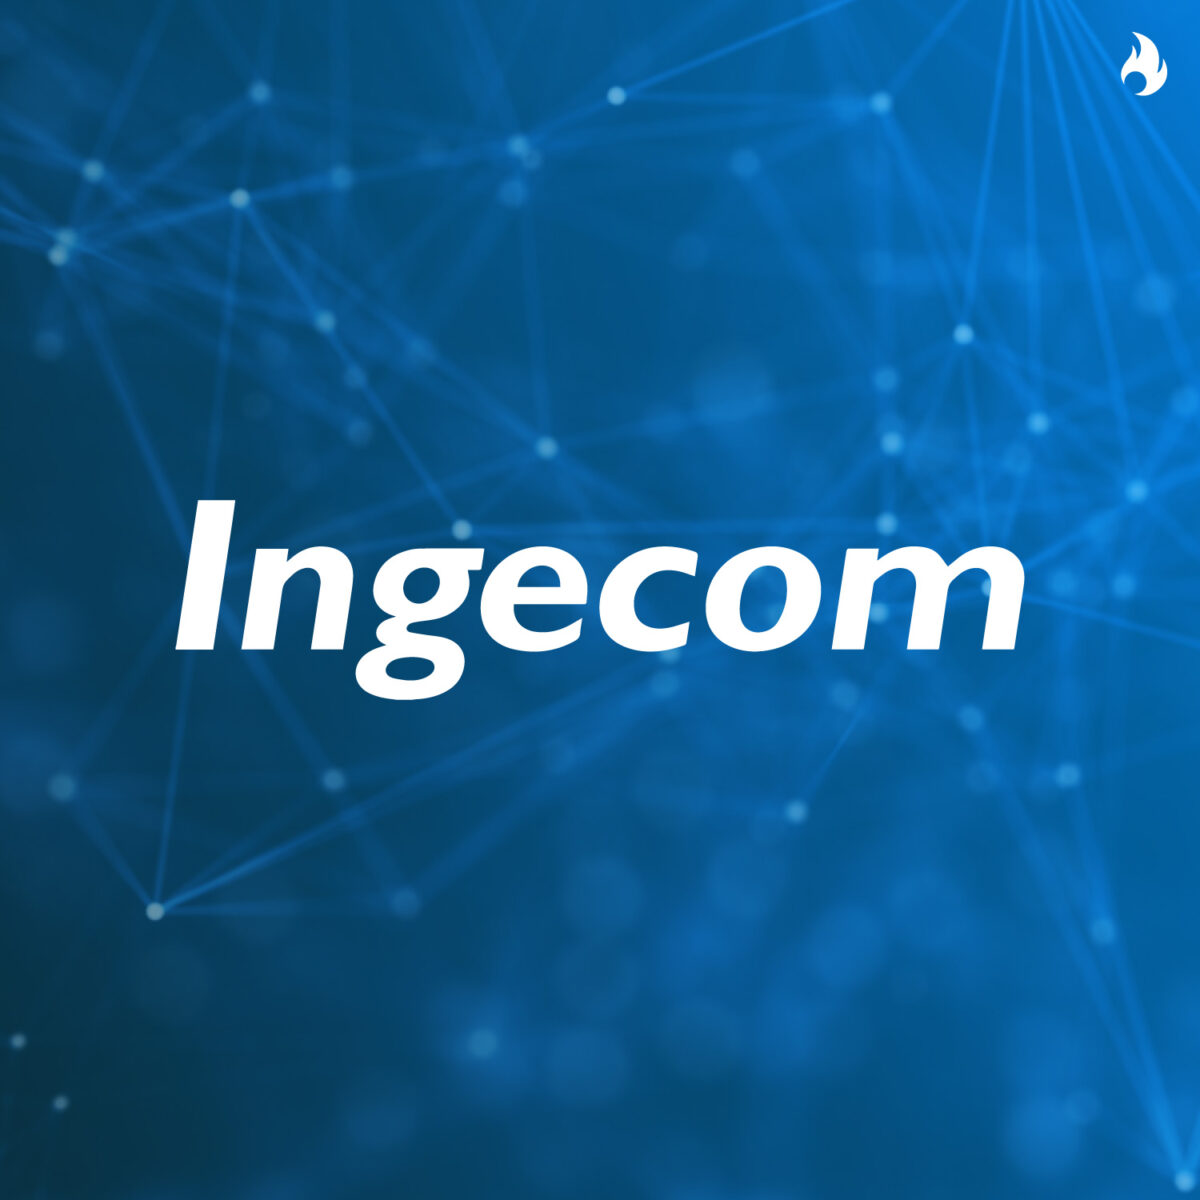 News thumbnail of the Ingecom logo, with Ingecome branding